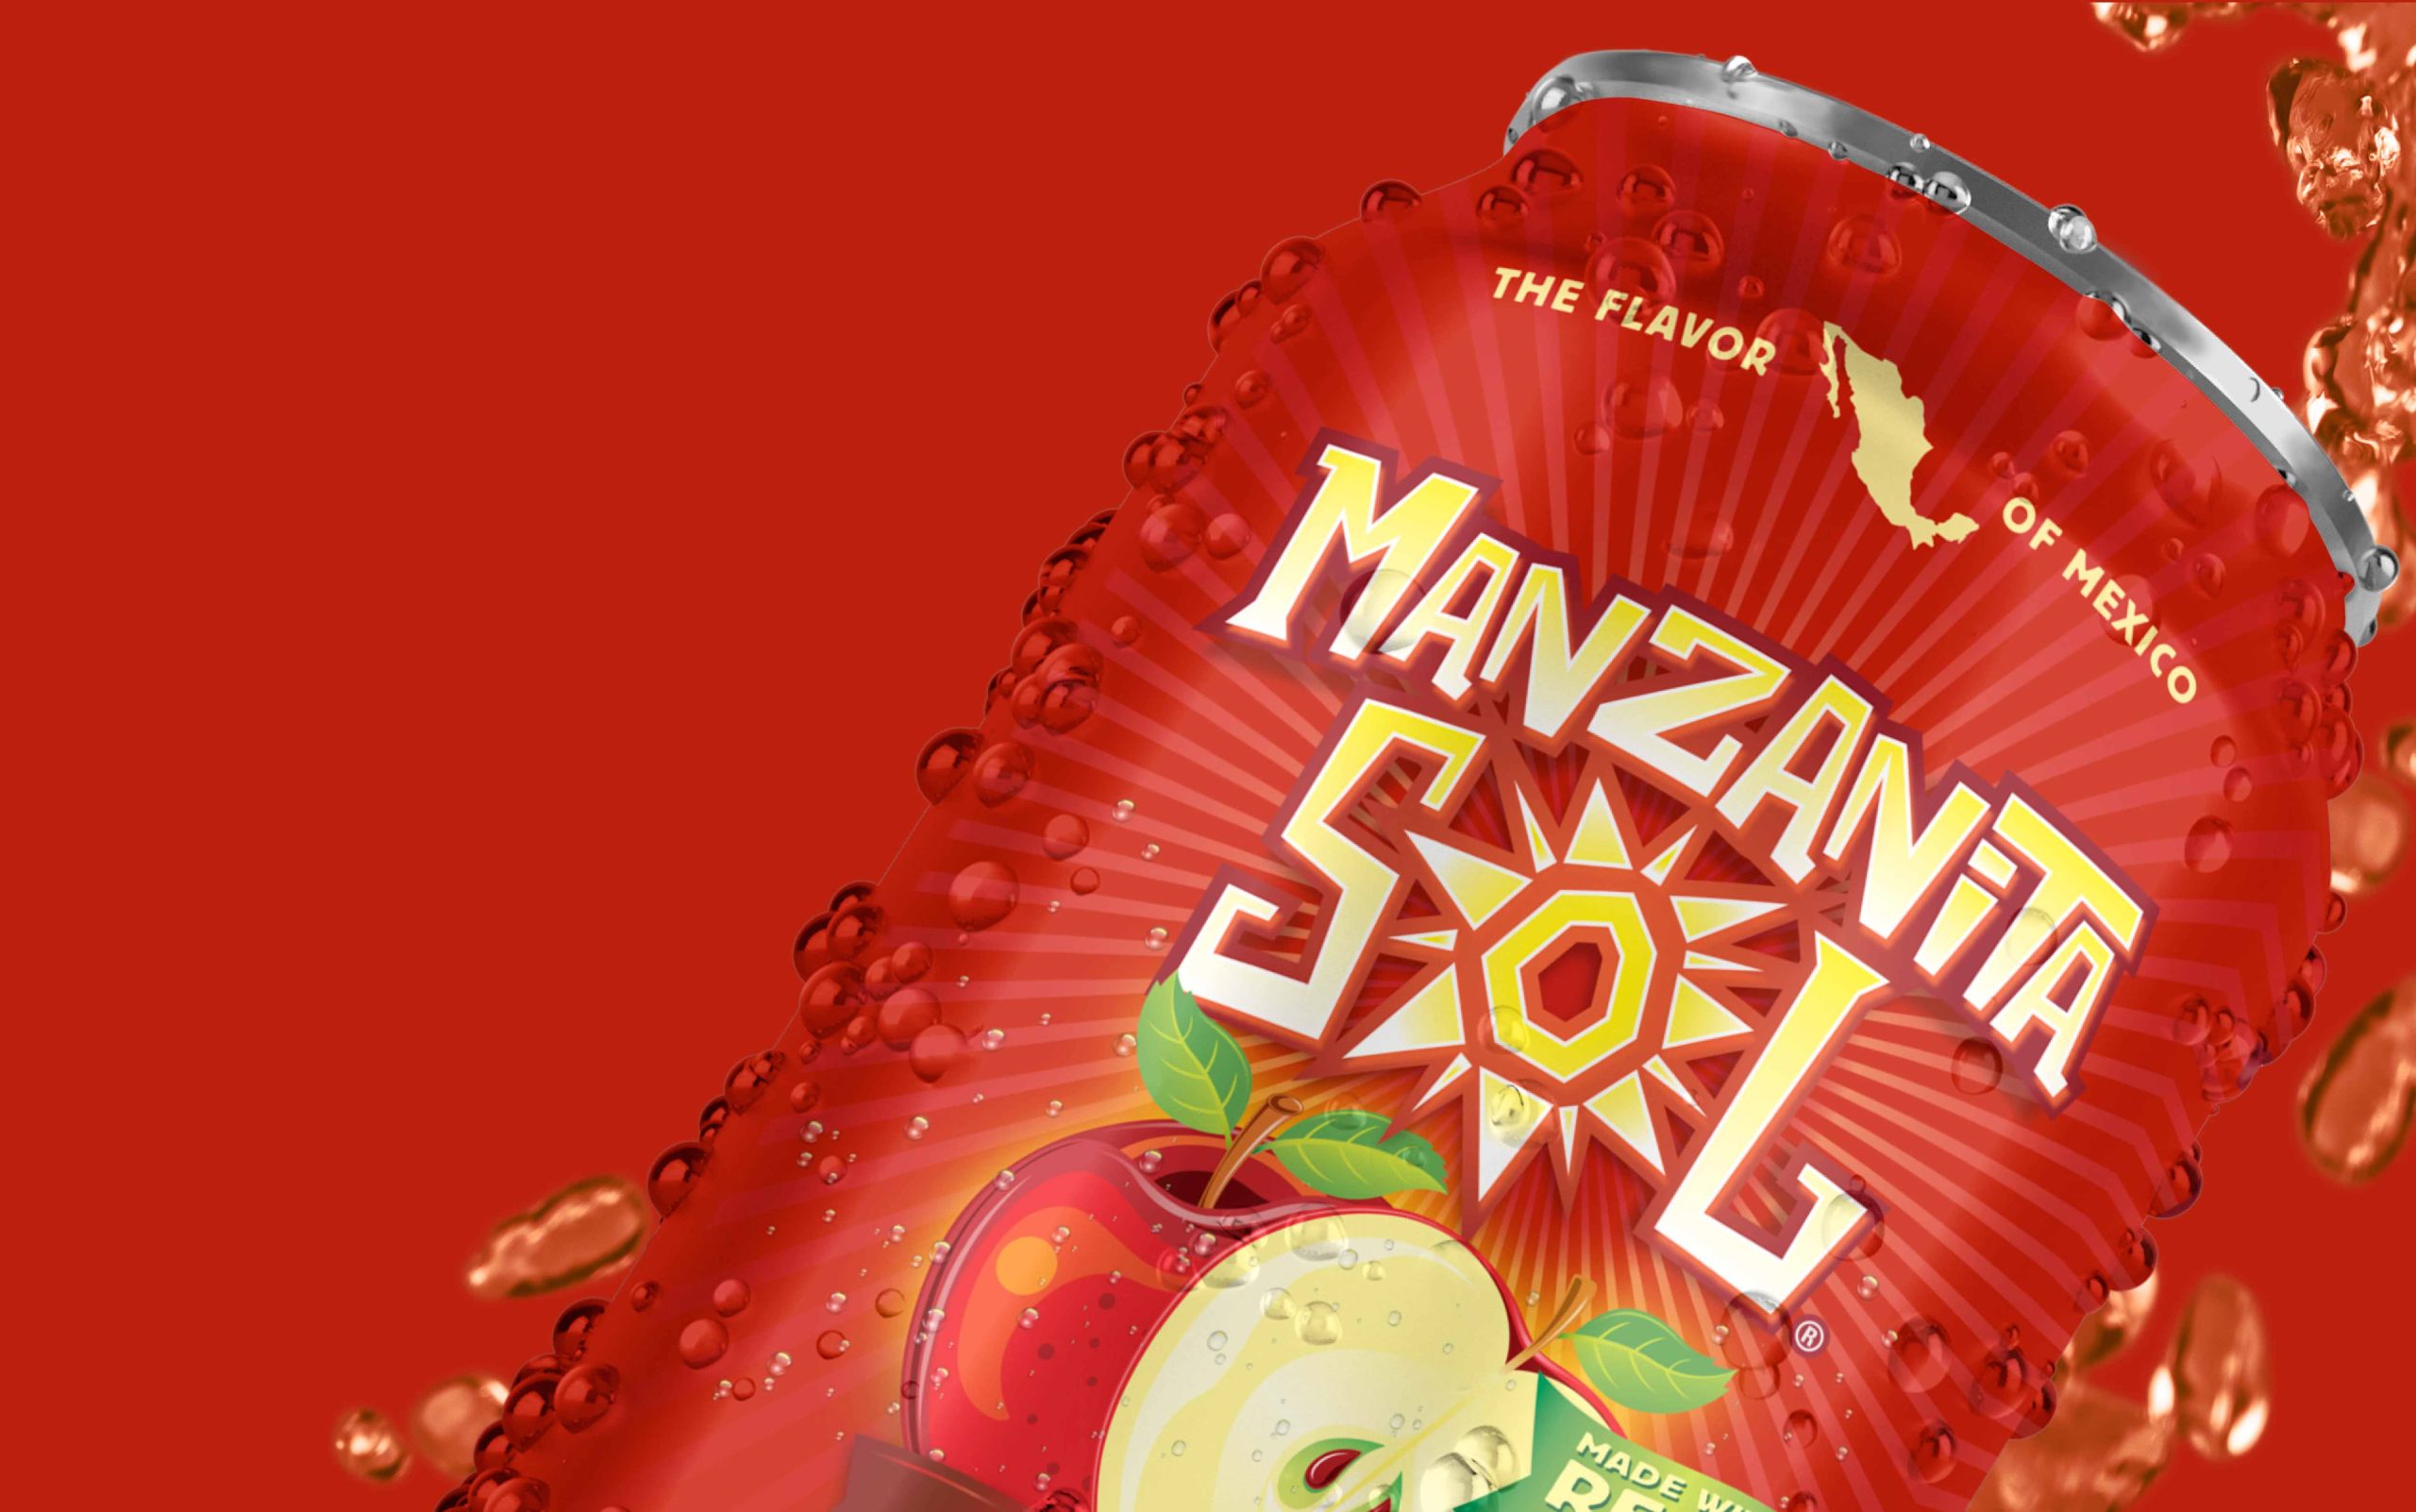 Closeup of can design for Mexican apple juice brand Manzanita sol